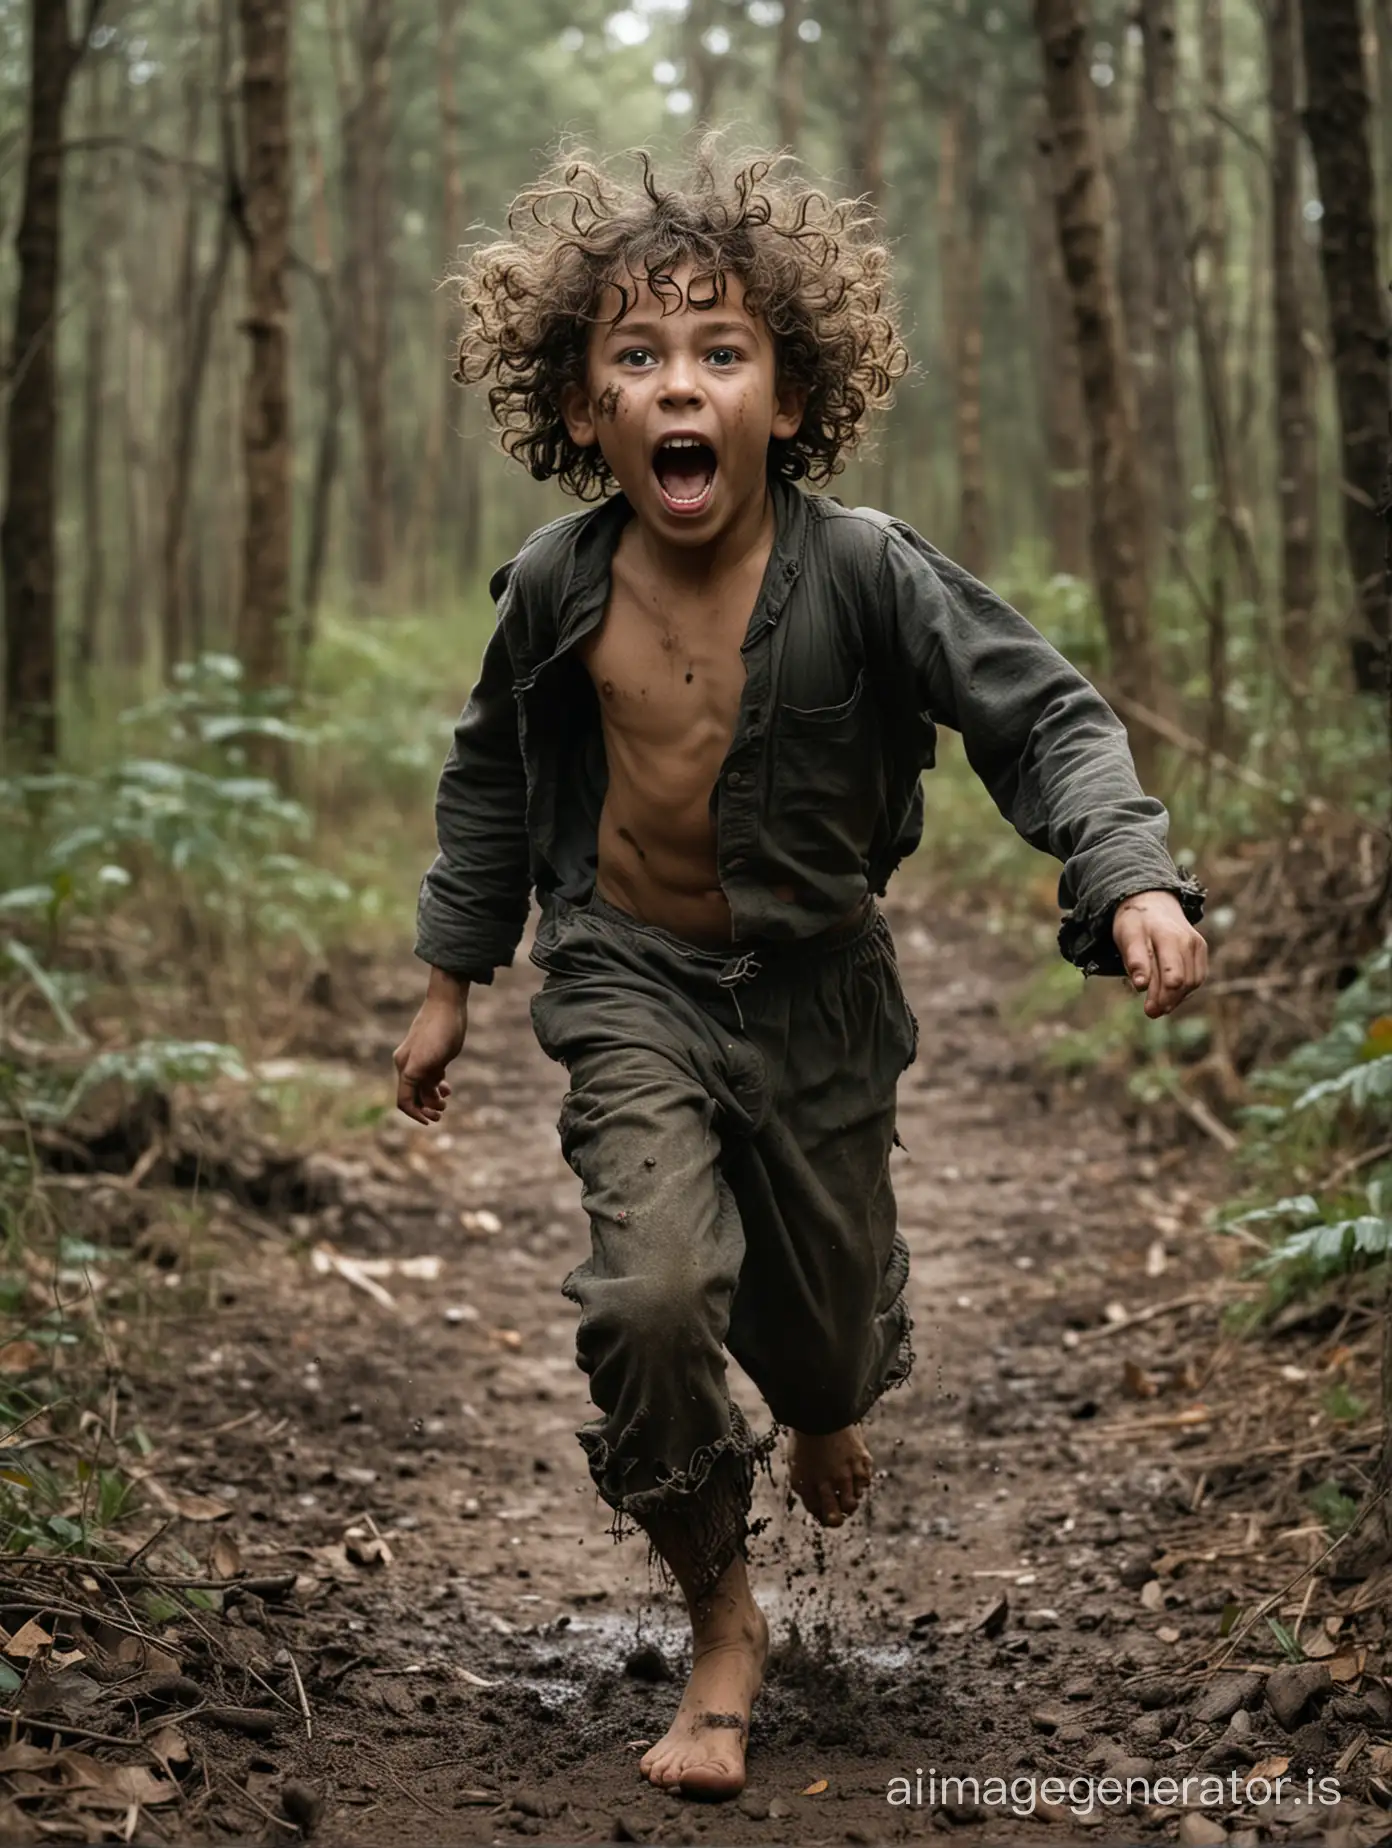 1920s-Wild-Child-Running-Through-Forest-with-Frightening-Presence